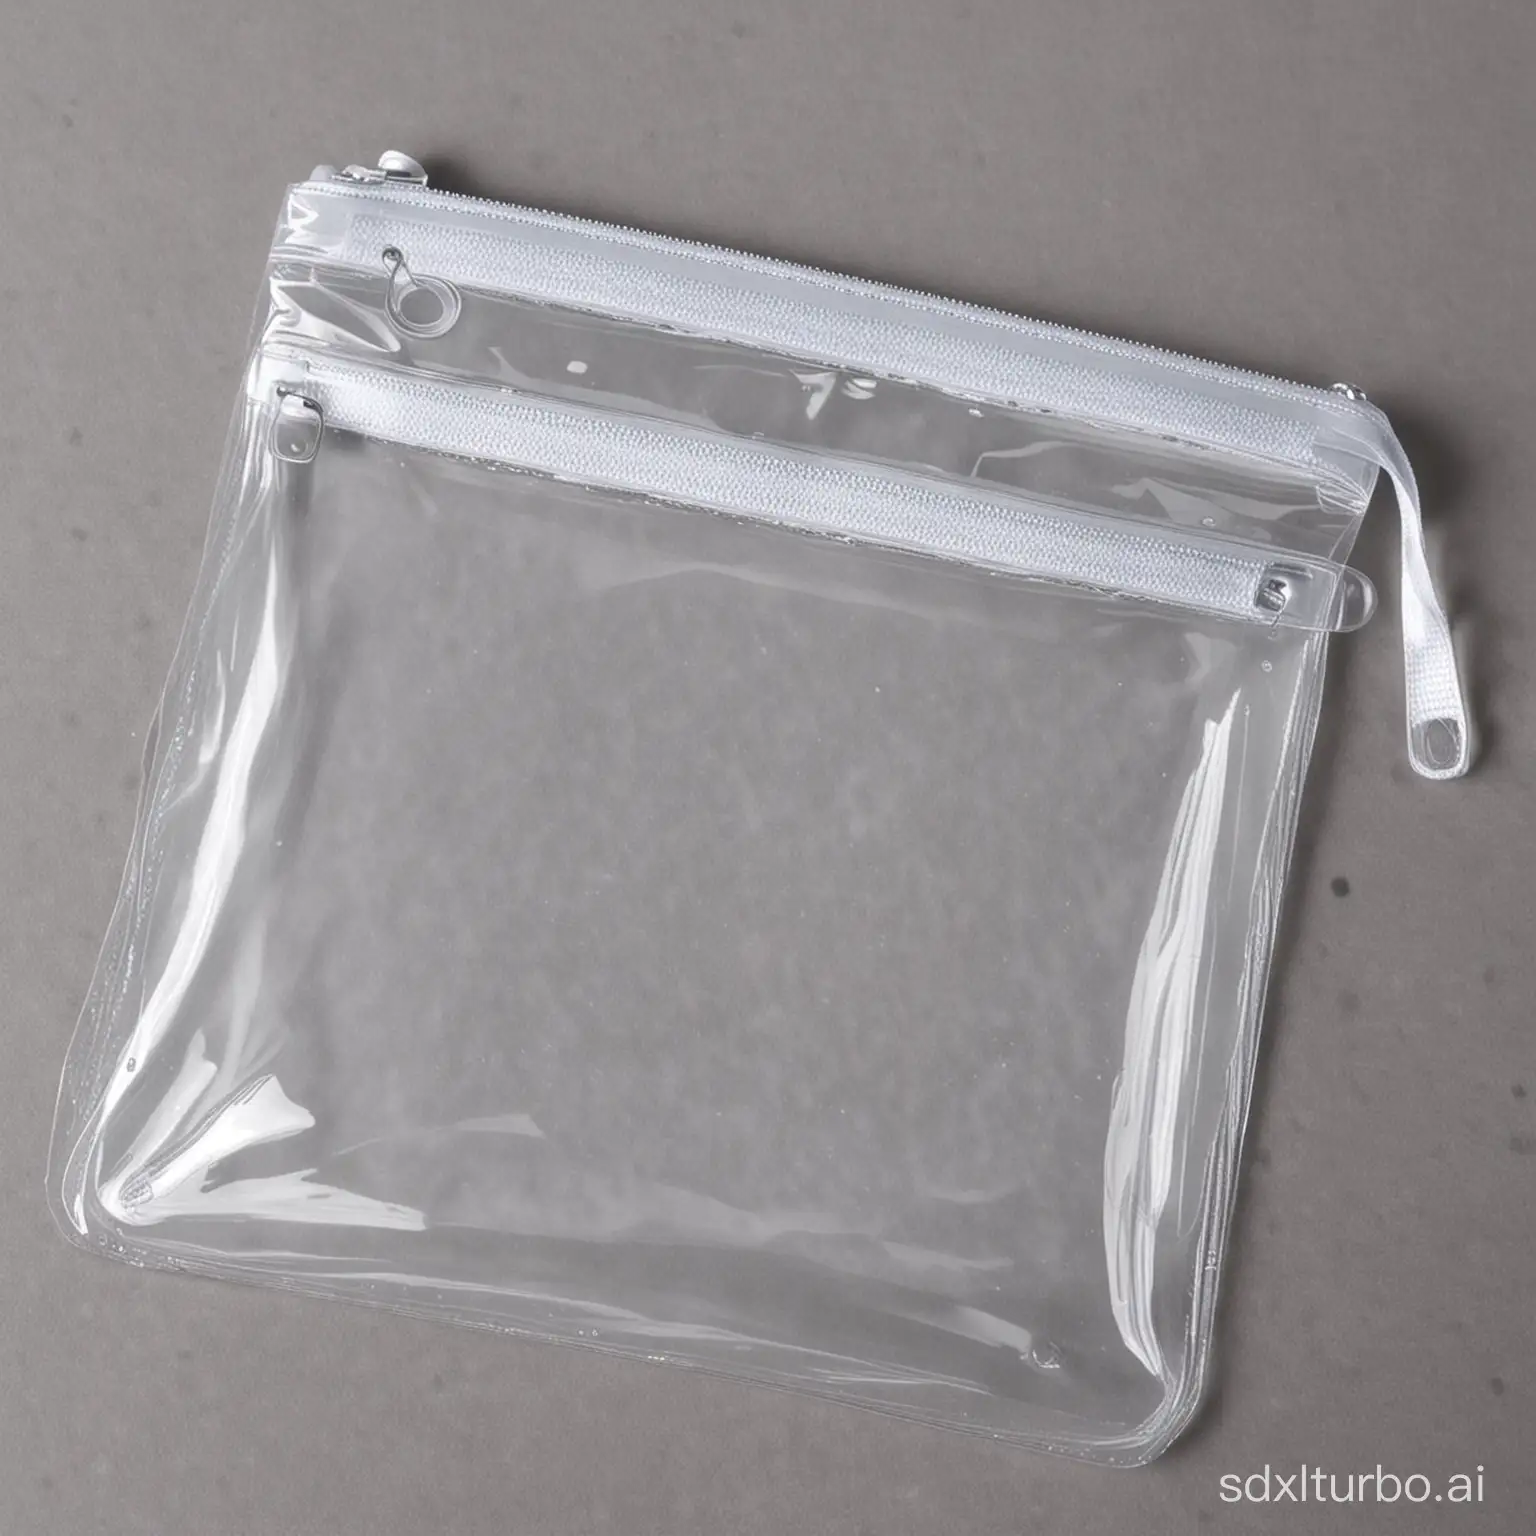 Water droplets hit the waterproof transparent zipper bag